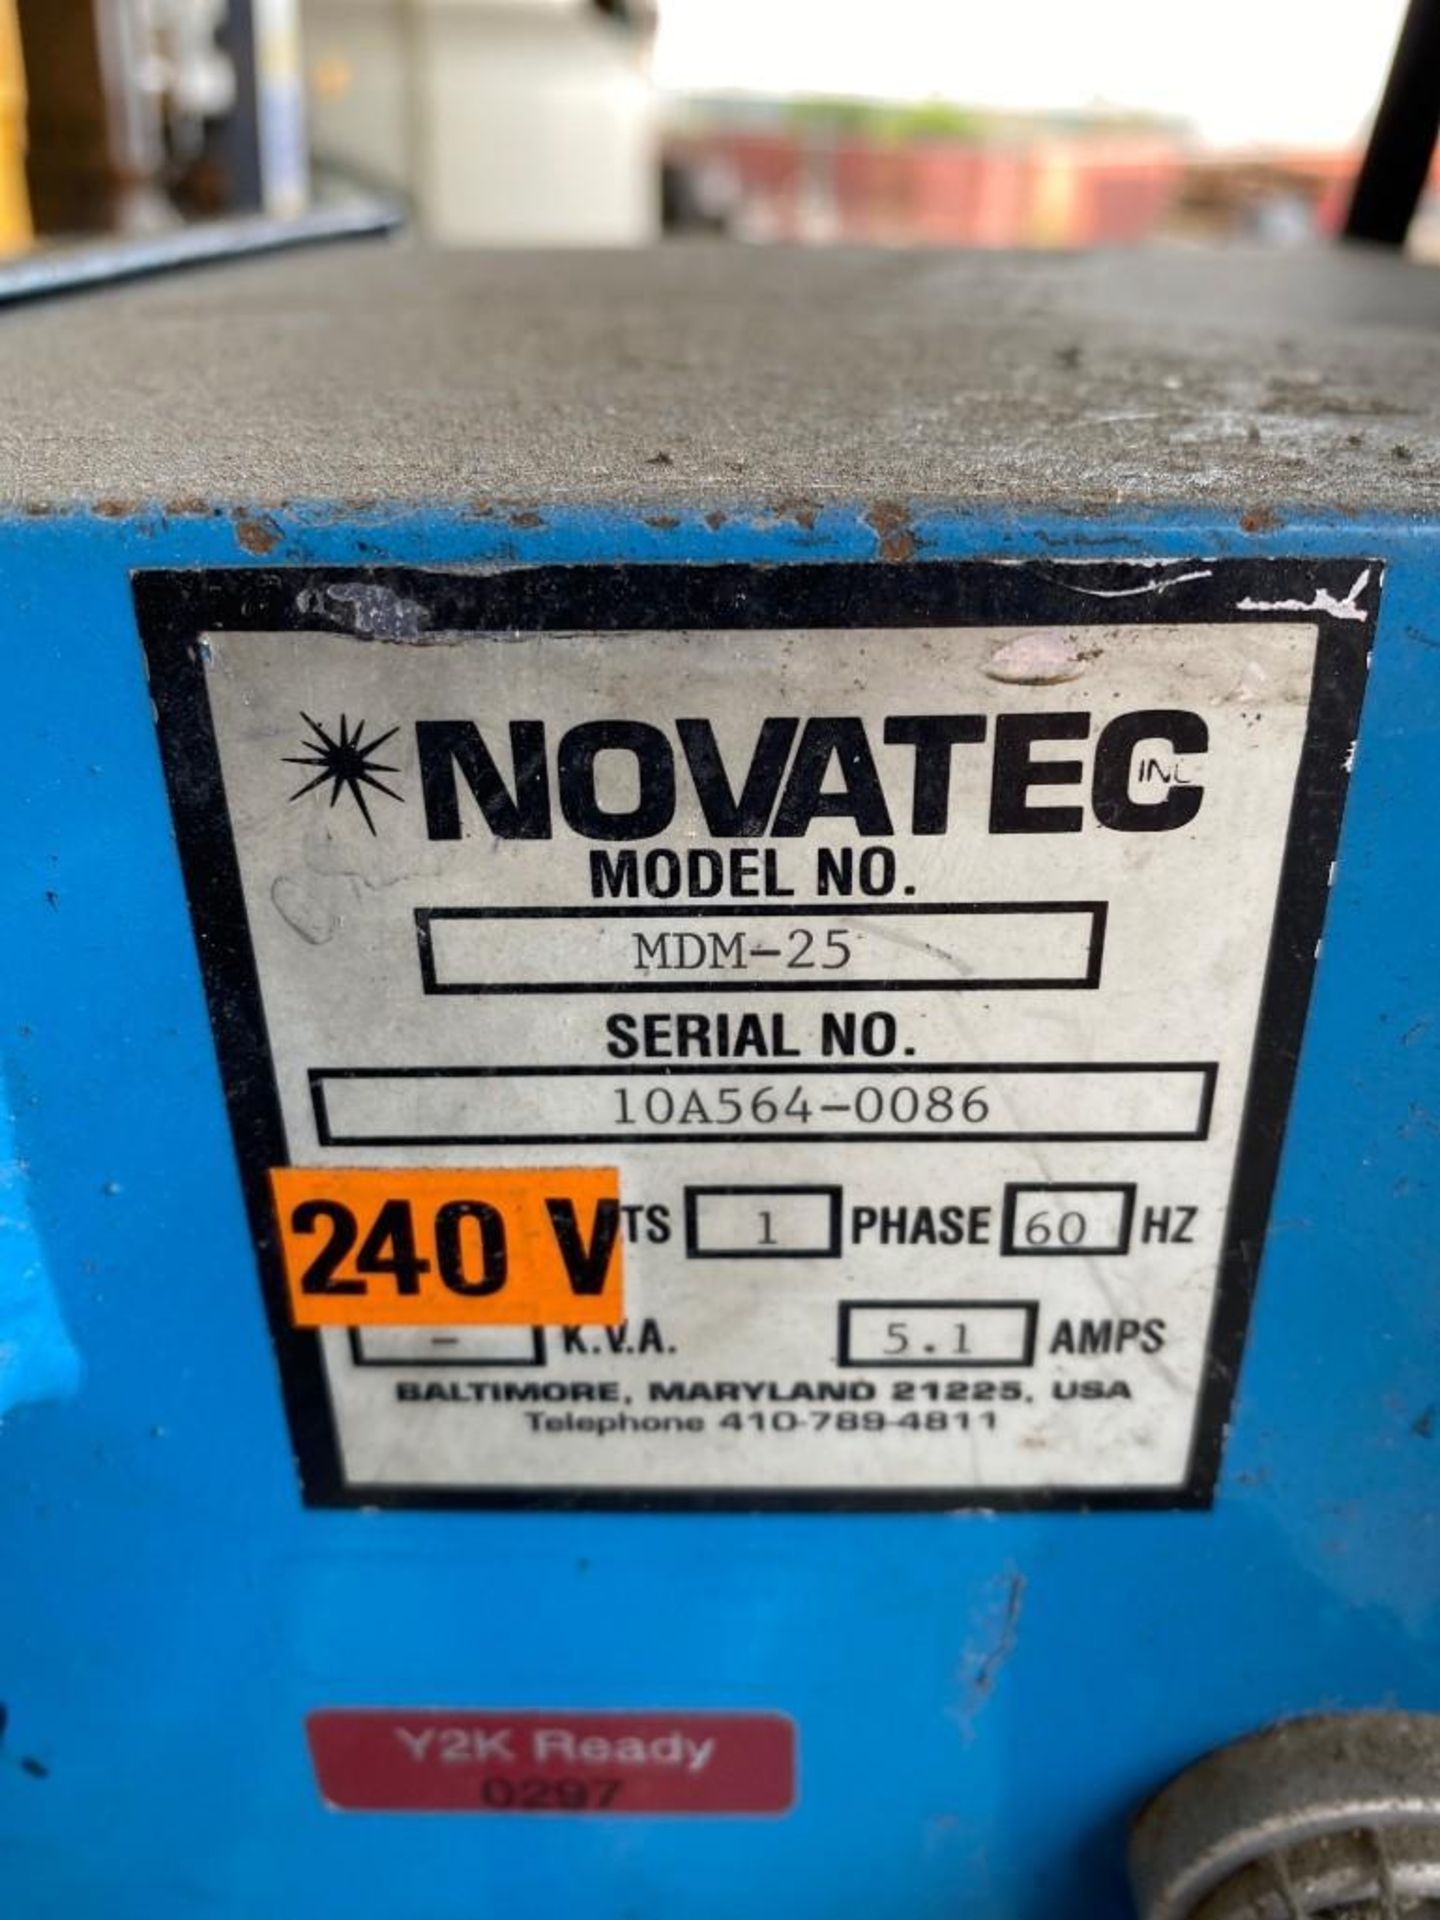 Novatec MDM-25 Dryer - Image 5 of 5